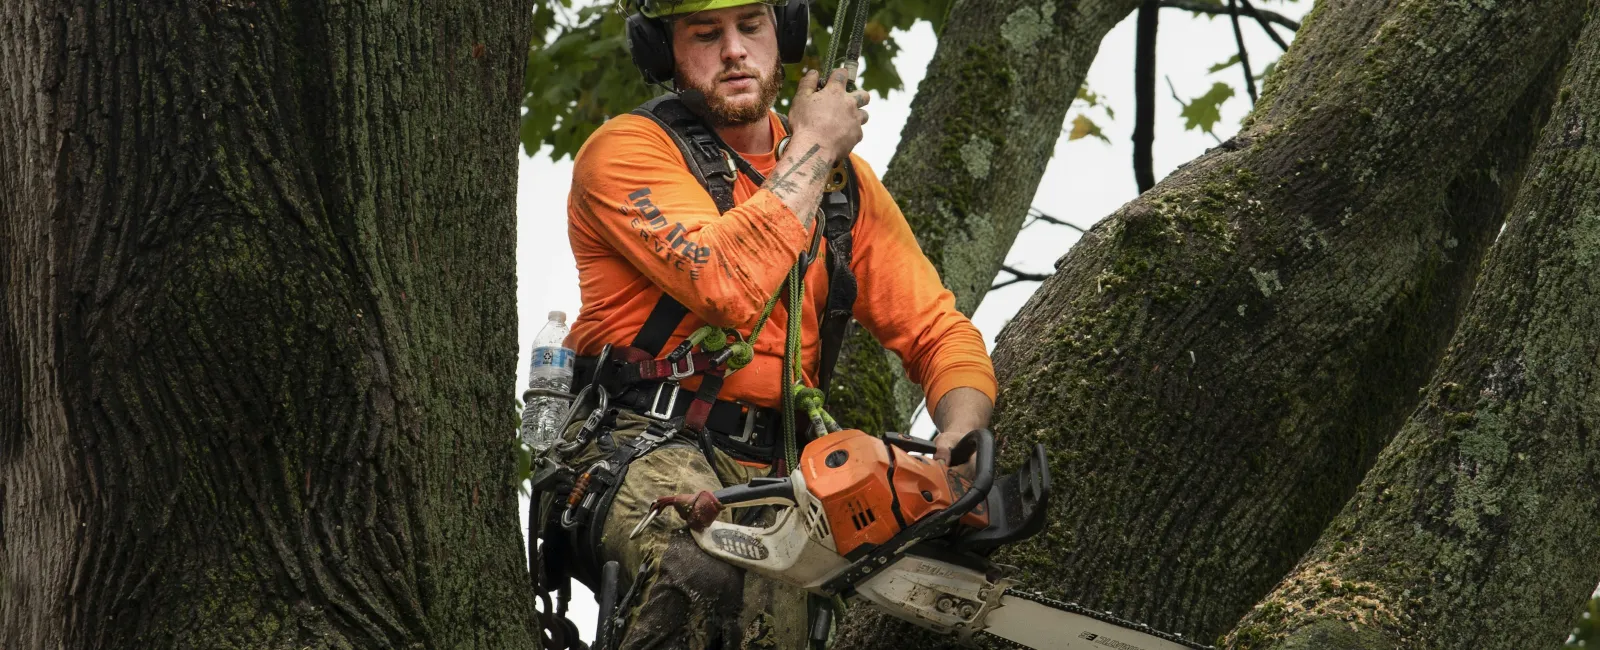 a man in a helmet sitting on a tree branch